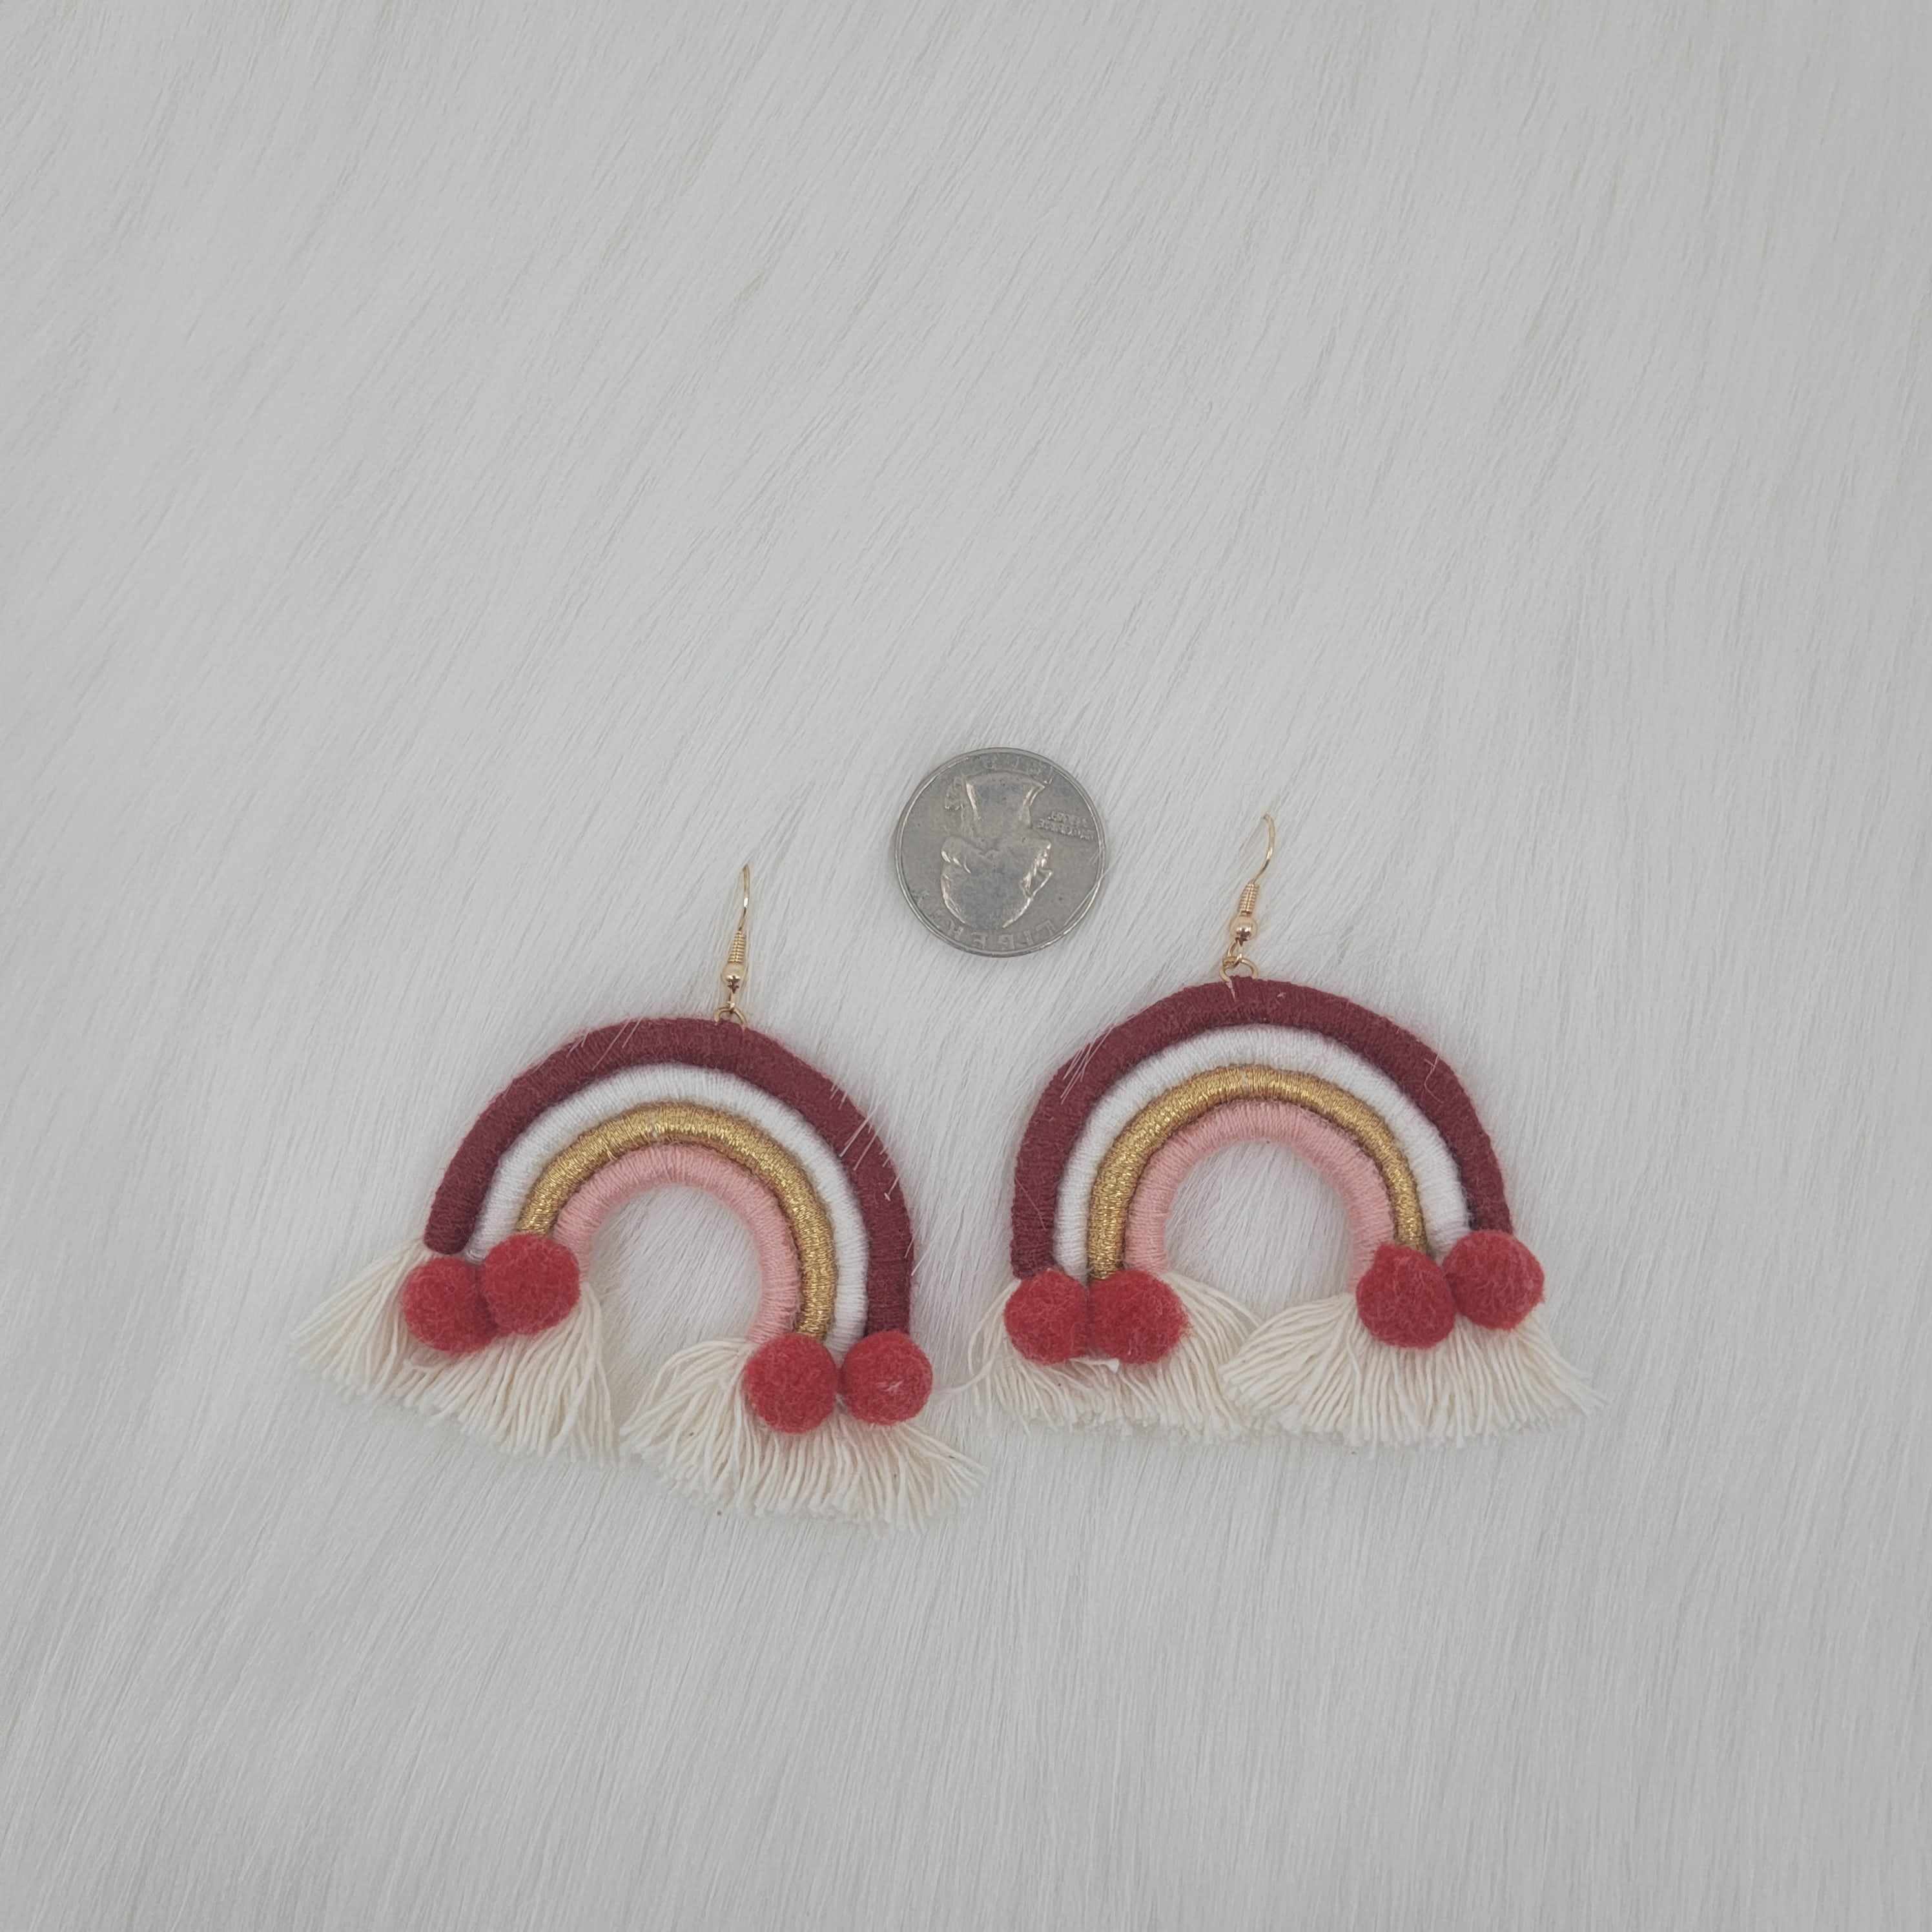 Rainbow Earrings With Pompom